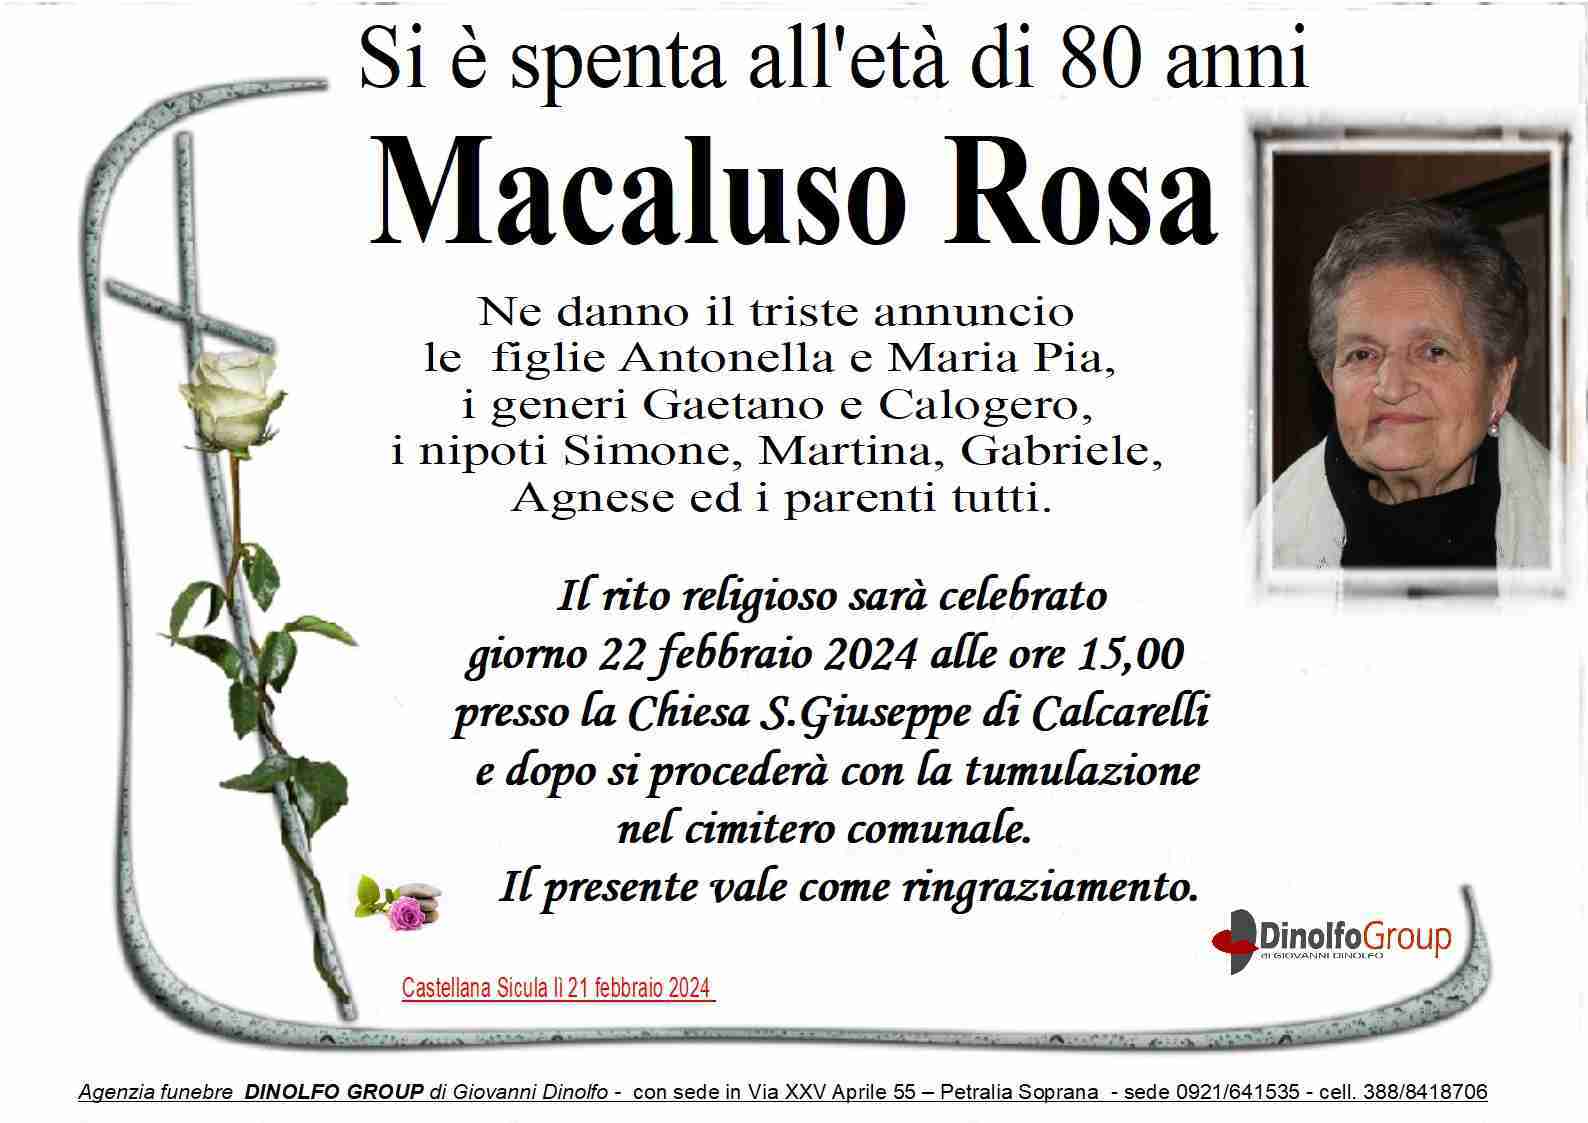 Macaluso Rosa